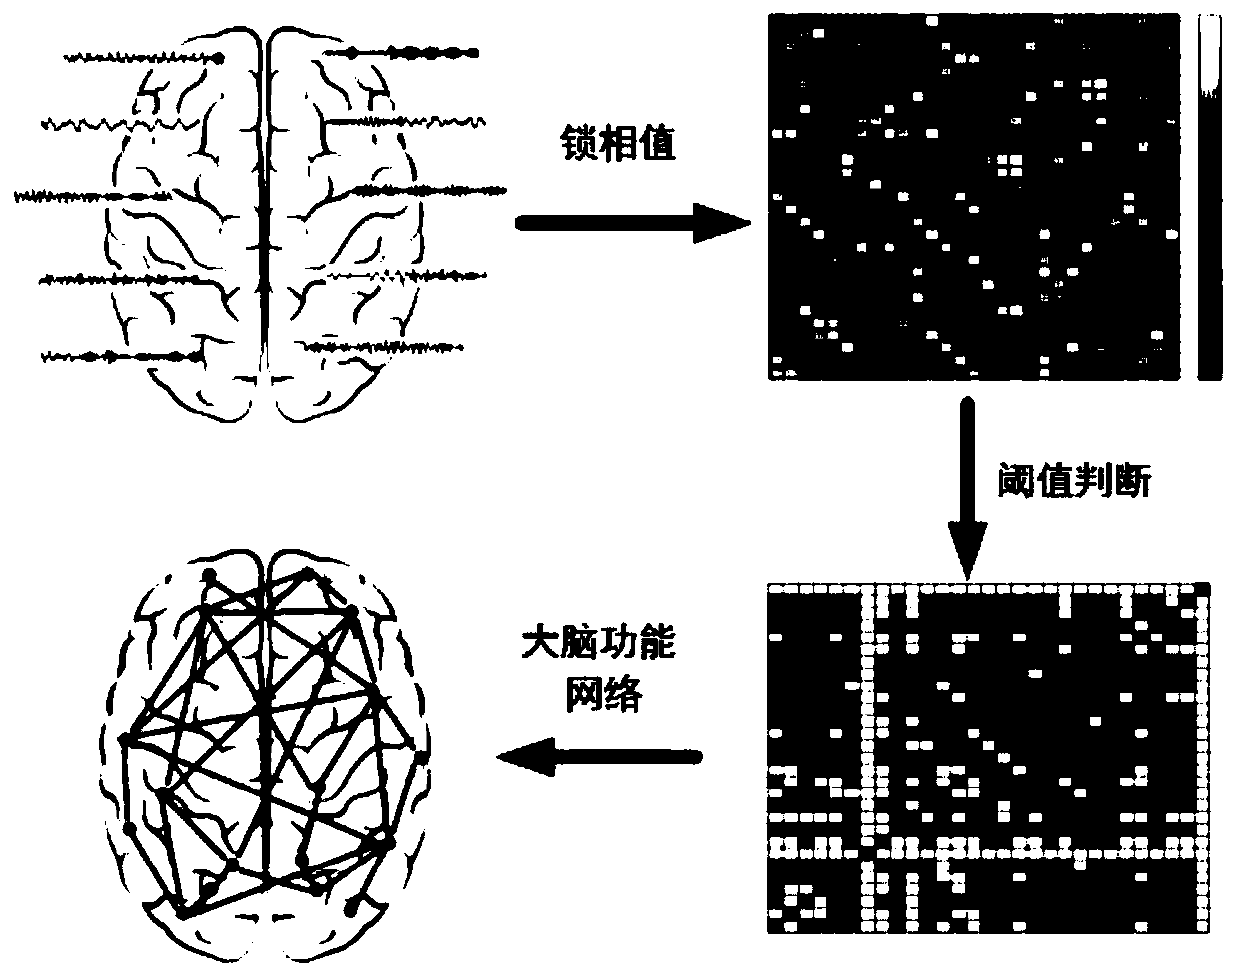 Electroencephalogram signal analysis method based on network motif